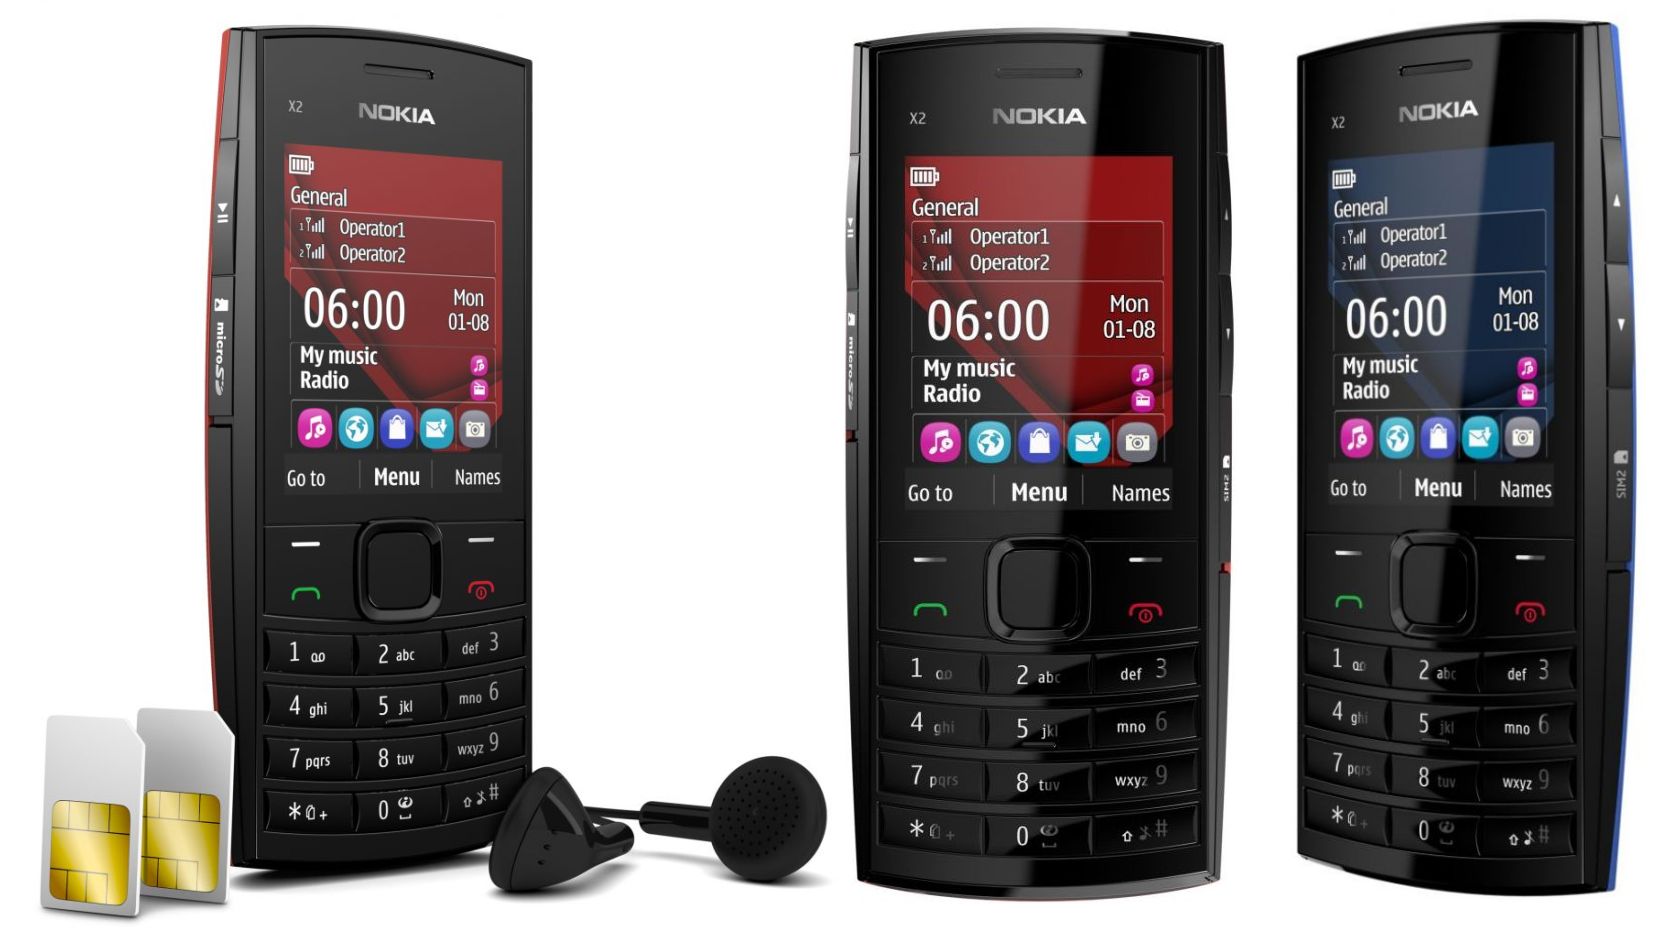 Nokia_X2-02_dual-SIM_music_phone_price_in_india.jpg